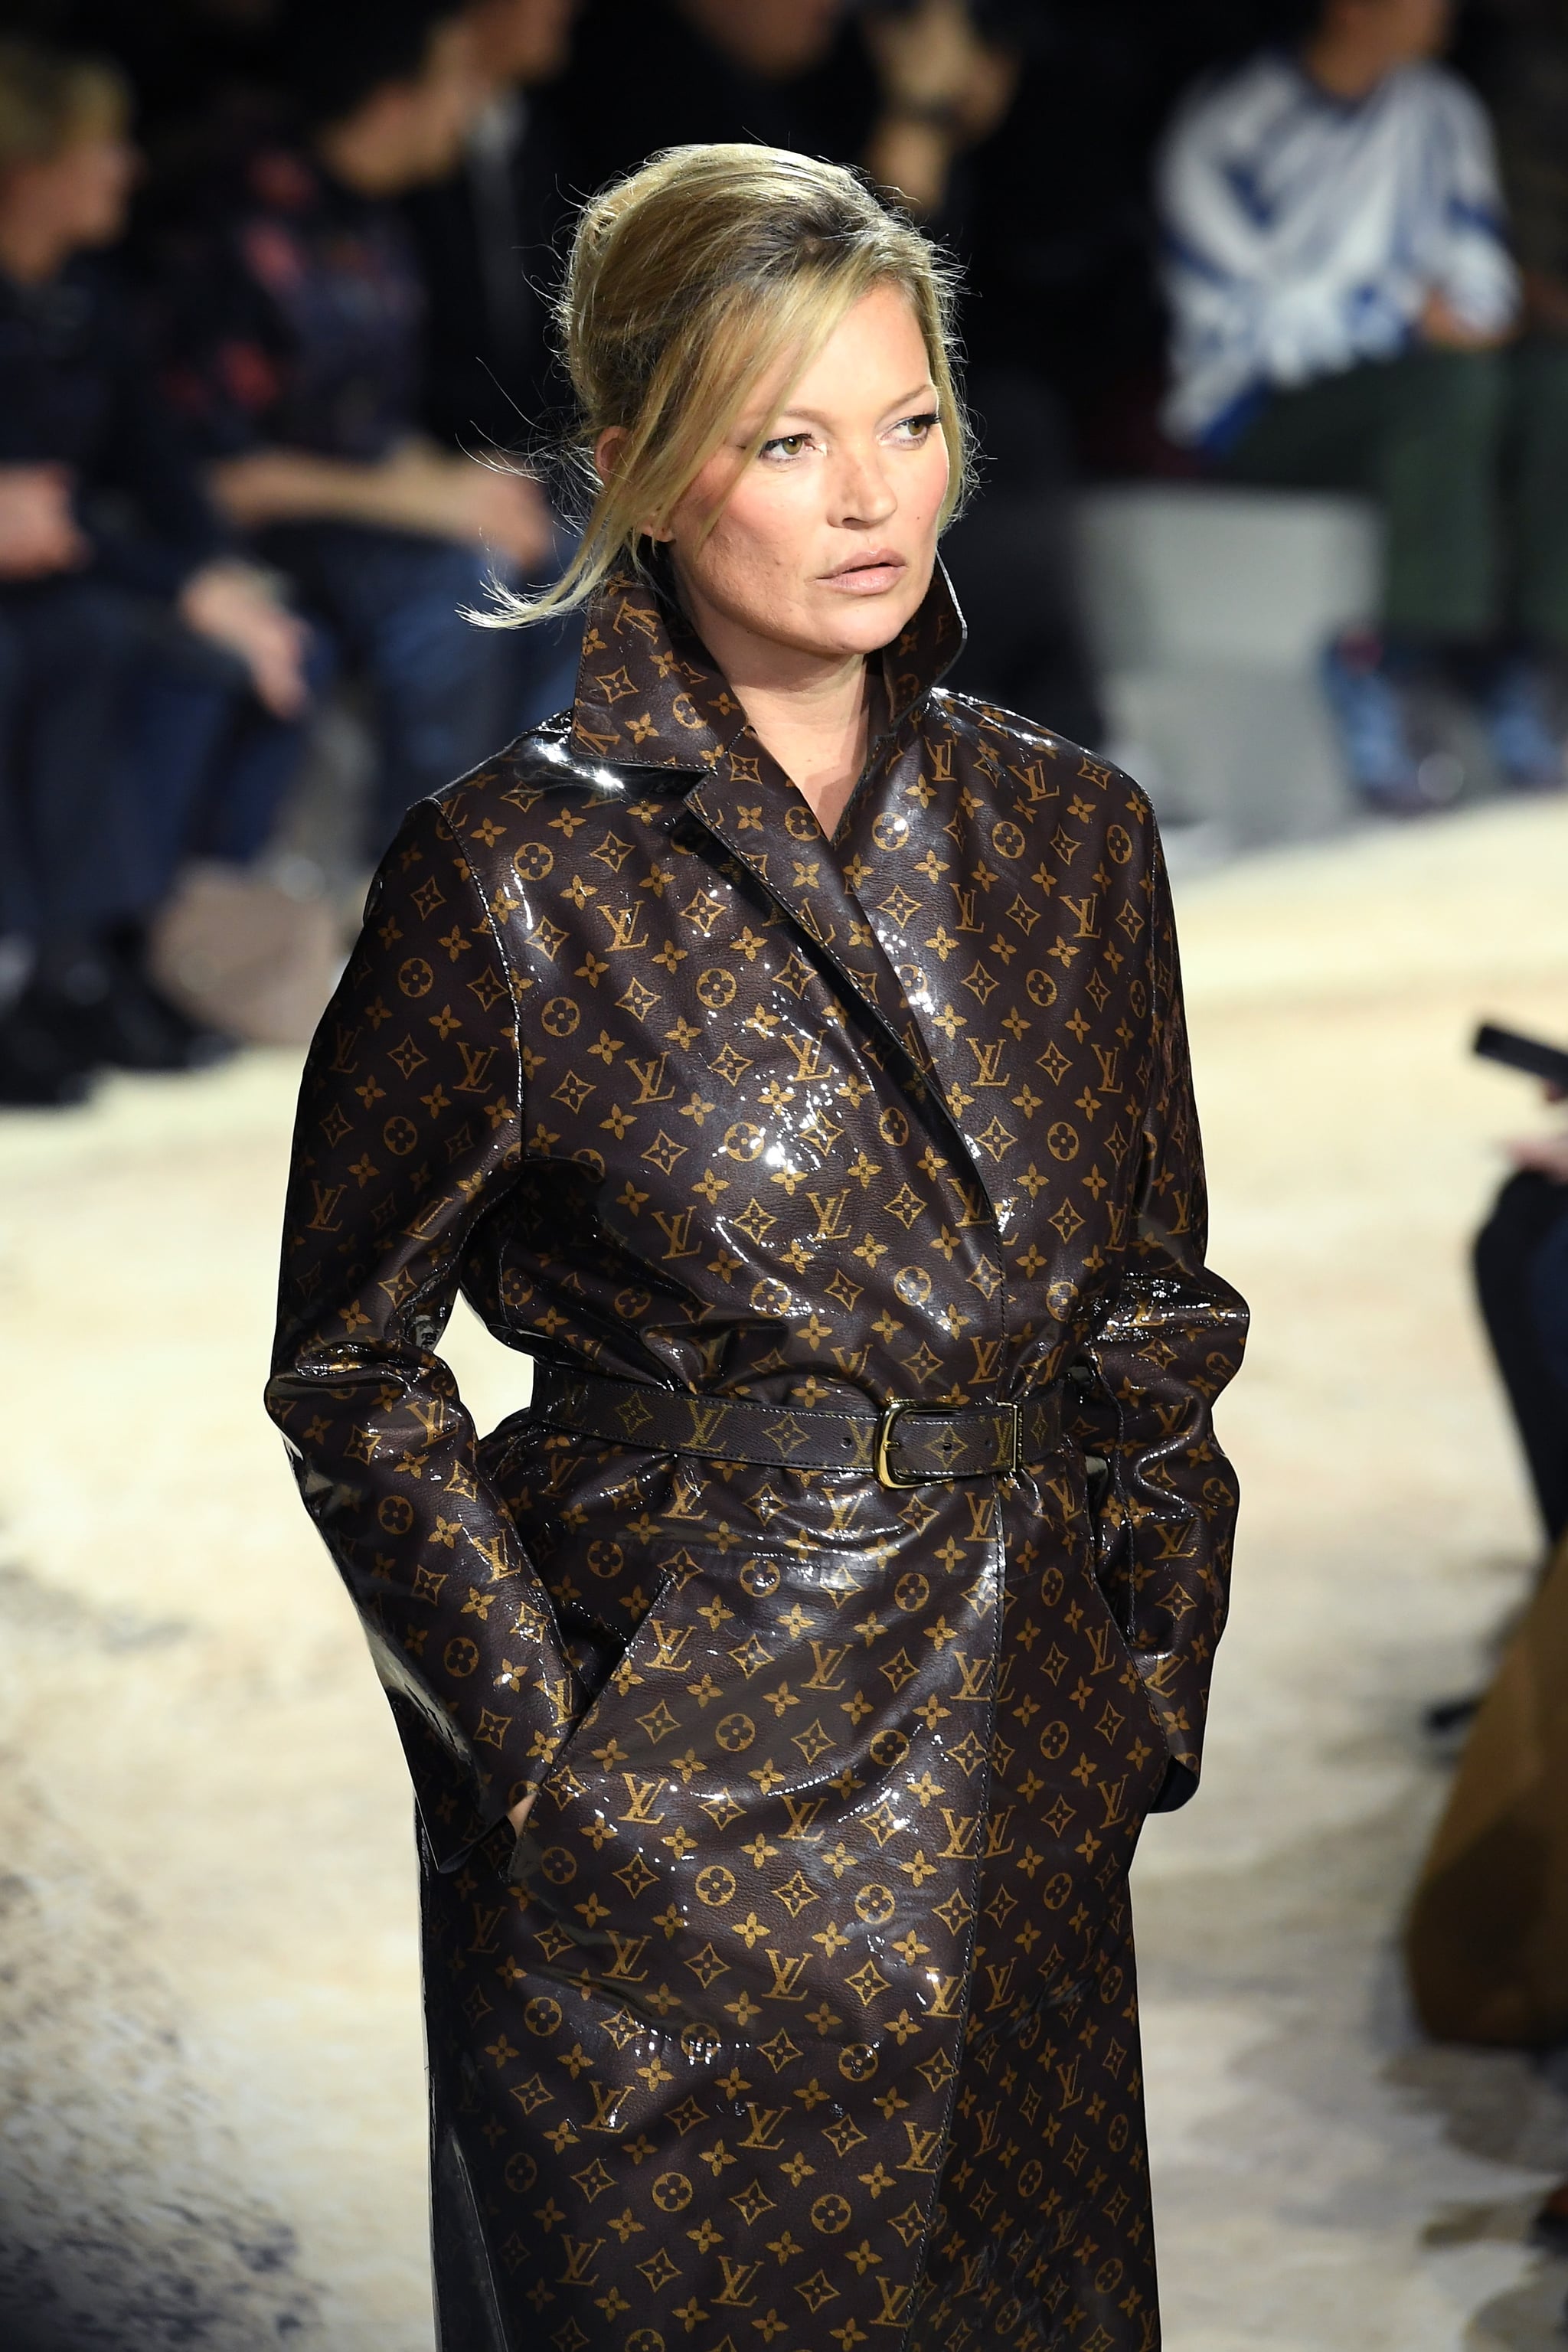 David Beckham and Kate Moss are fashion buddies at Louis Vuitton show